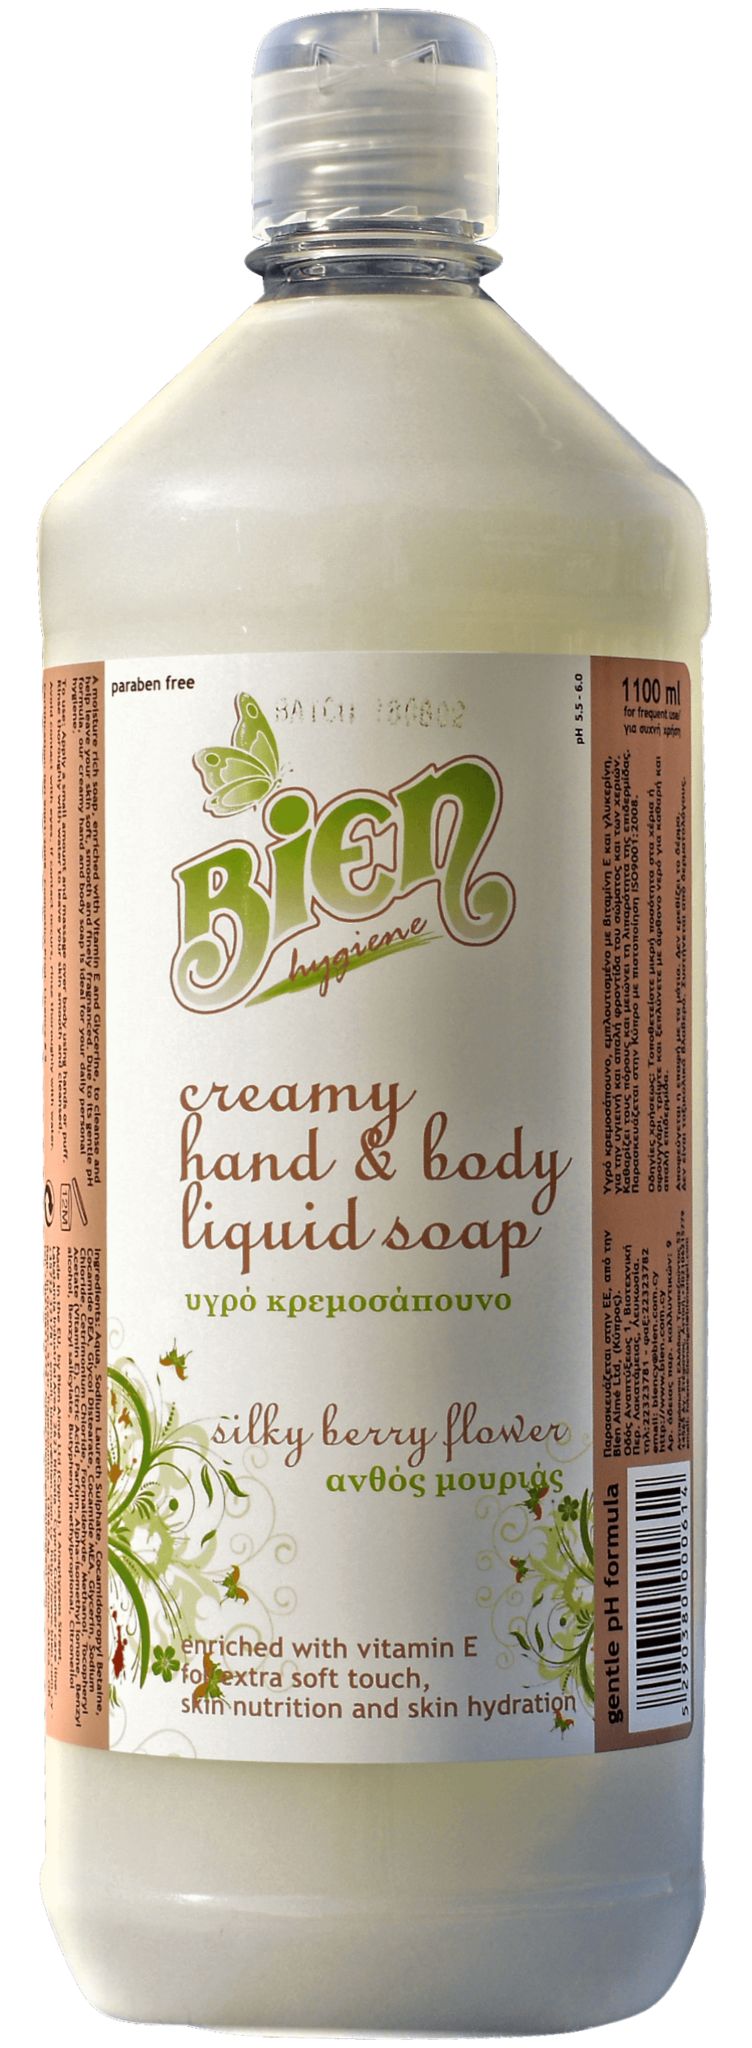 Creamy Hand & Body Liquid Soap | Silky Berry Flower 1.1L